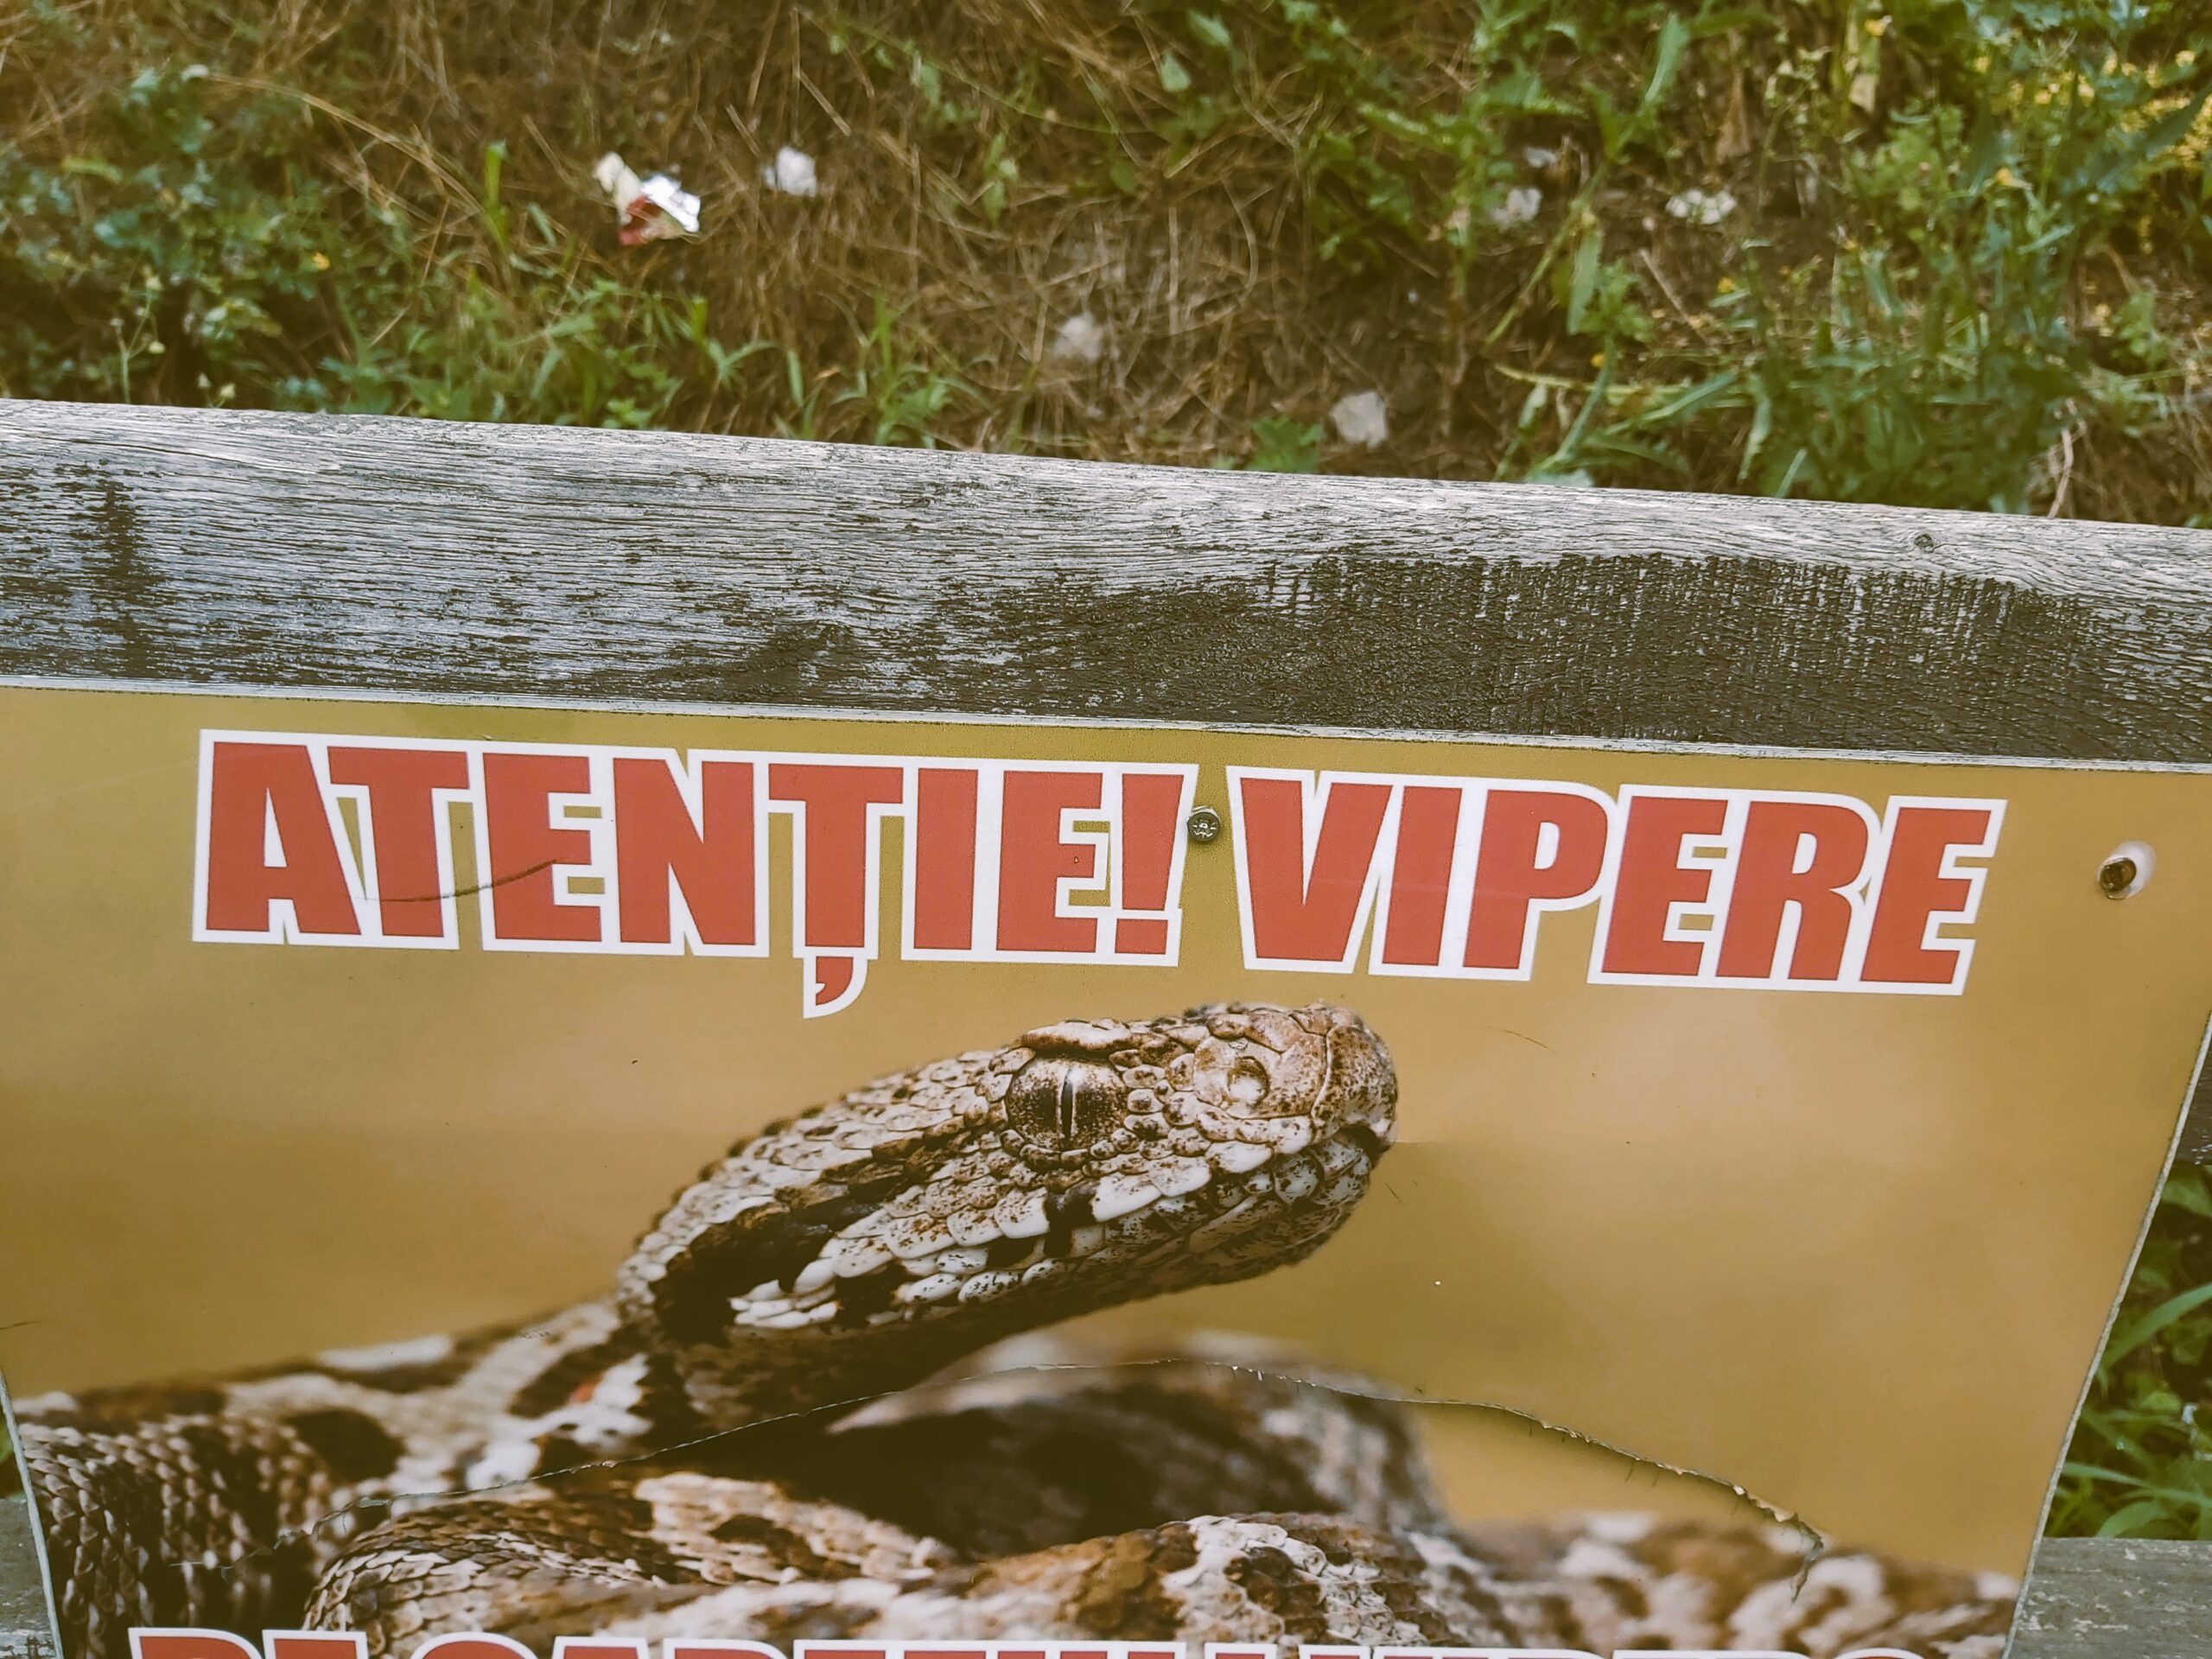 Viper warning sign at Deva Fortress, Romania